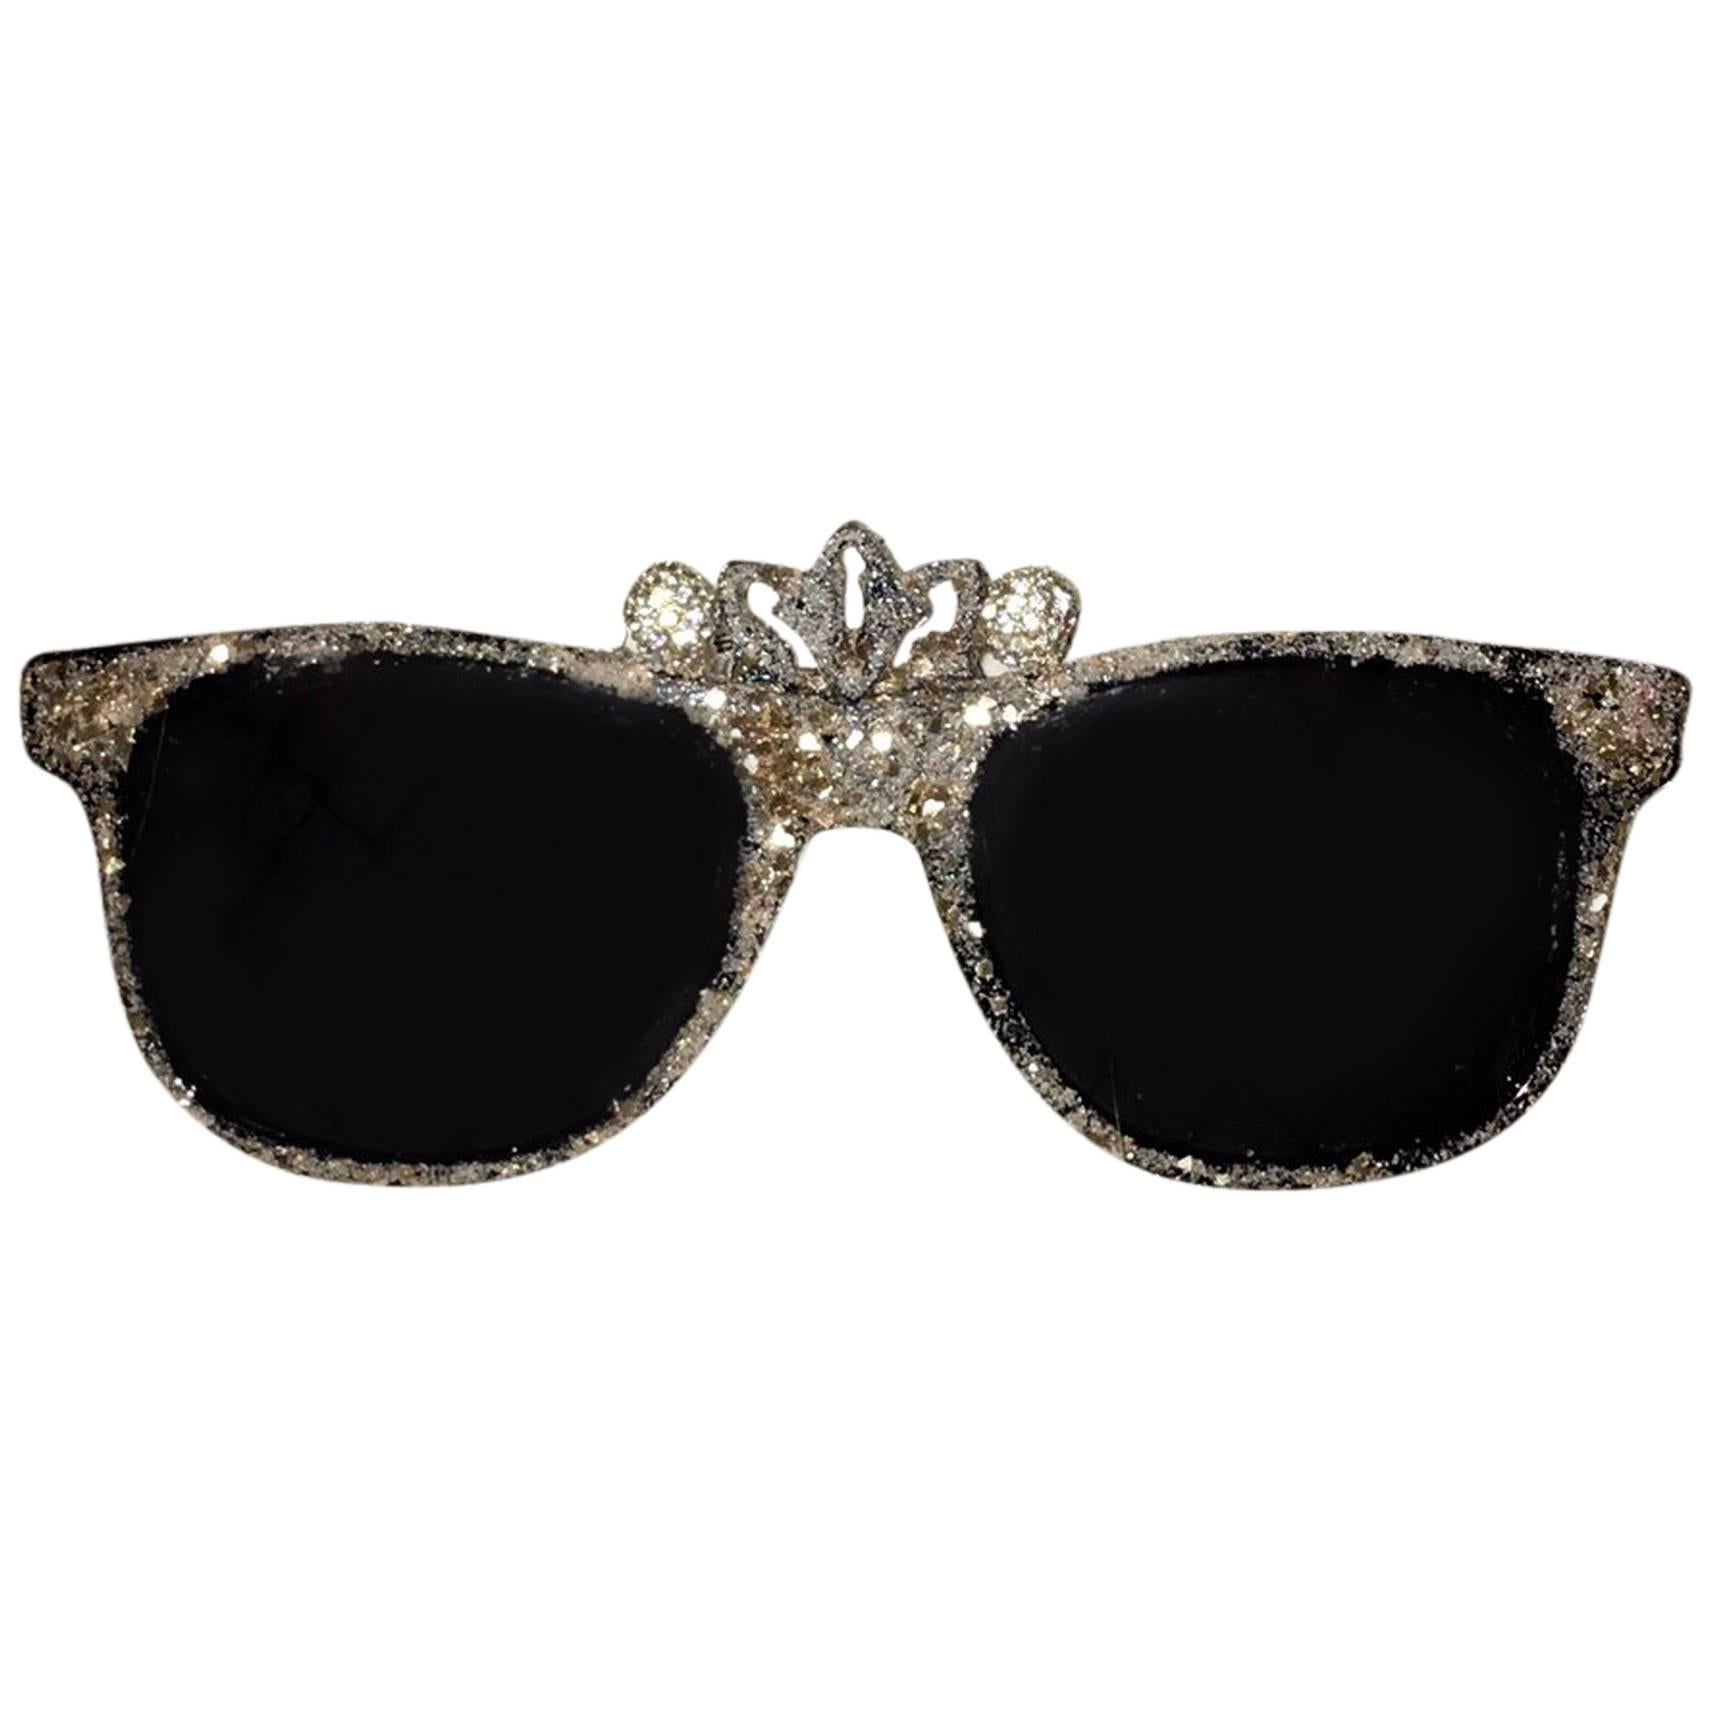 STACY ENGMAN ART ROYALTY - Signature Diamond Dust Sunglasses-Tiara For Sale